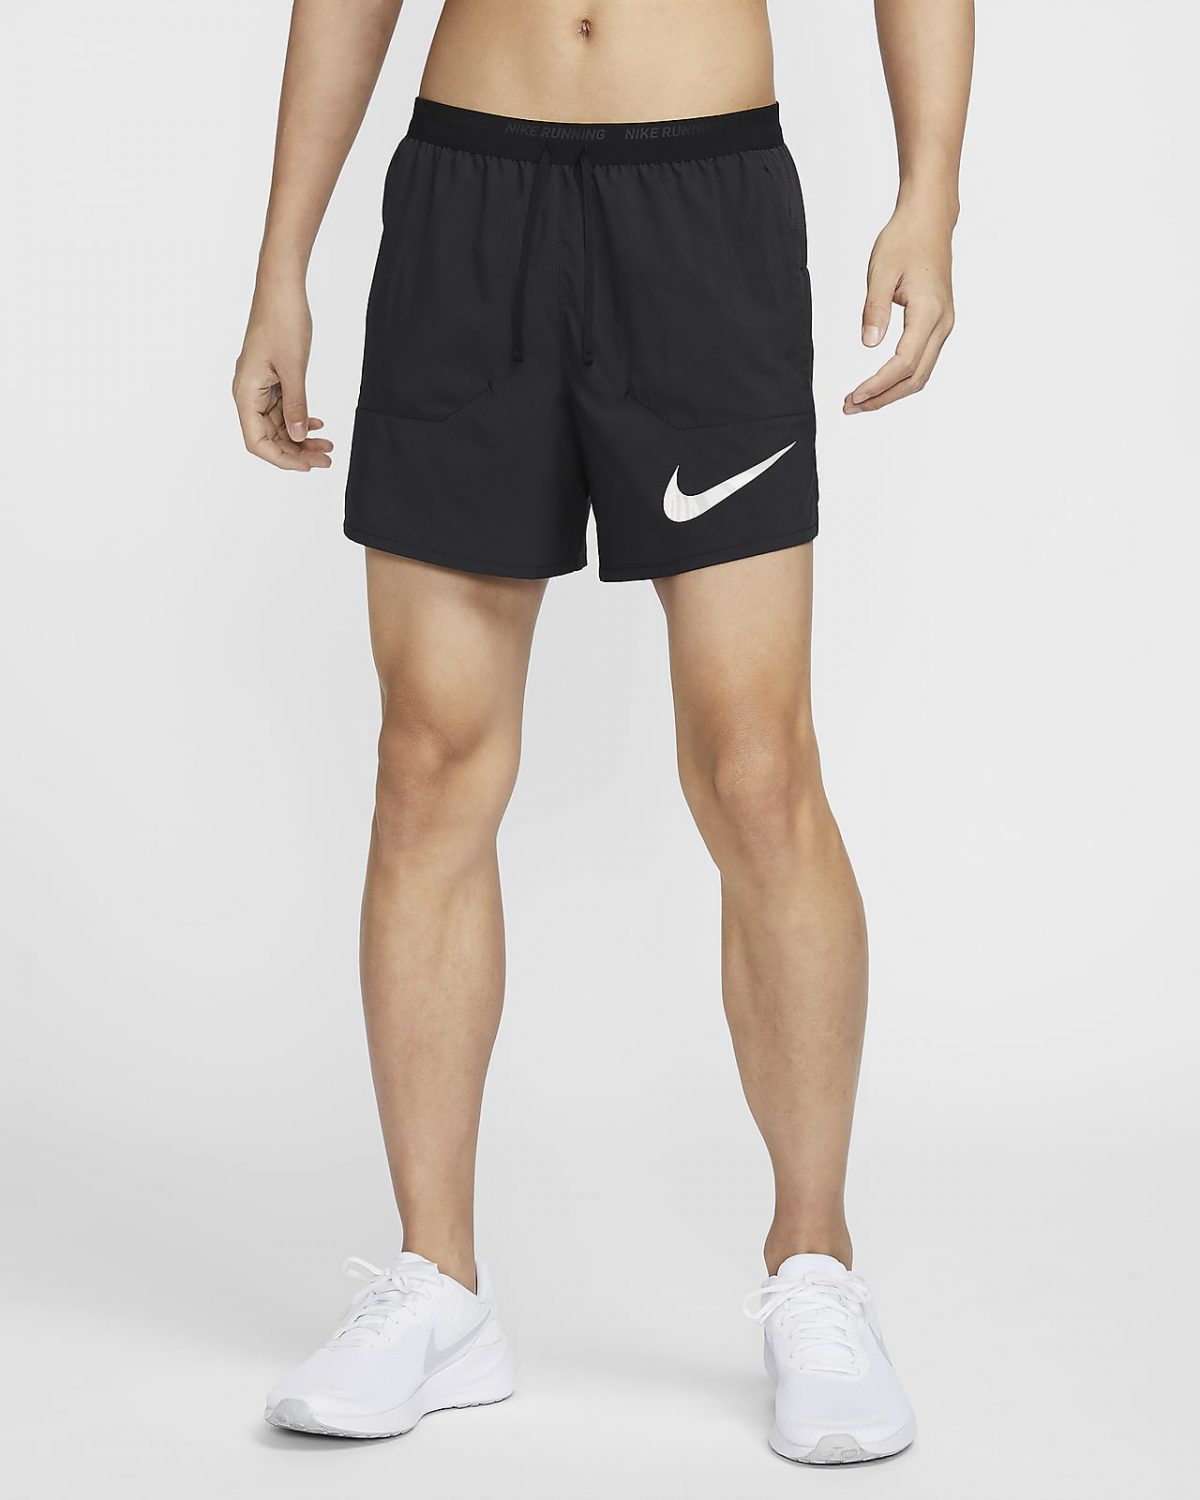 Мужские шорты Nike Stride Run Energy черные фото